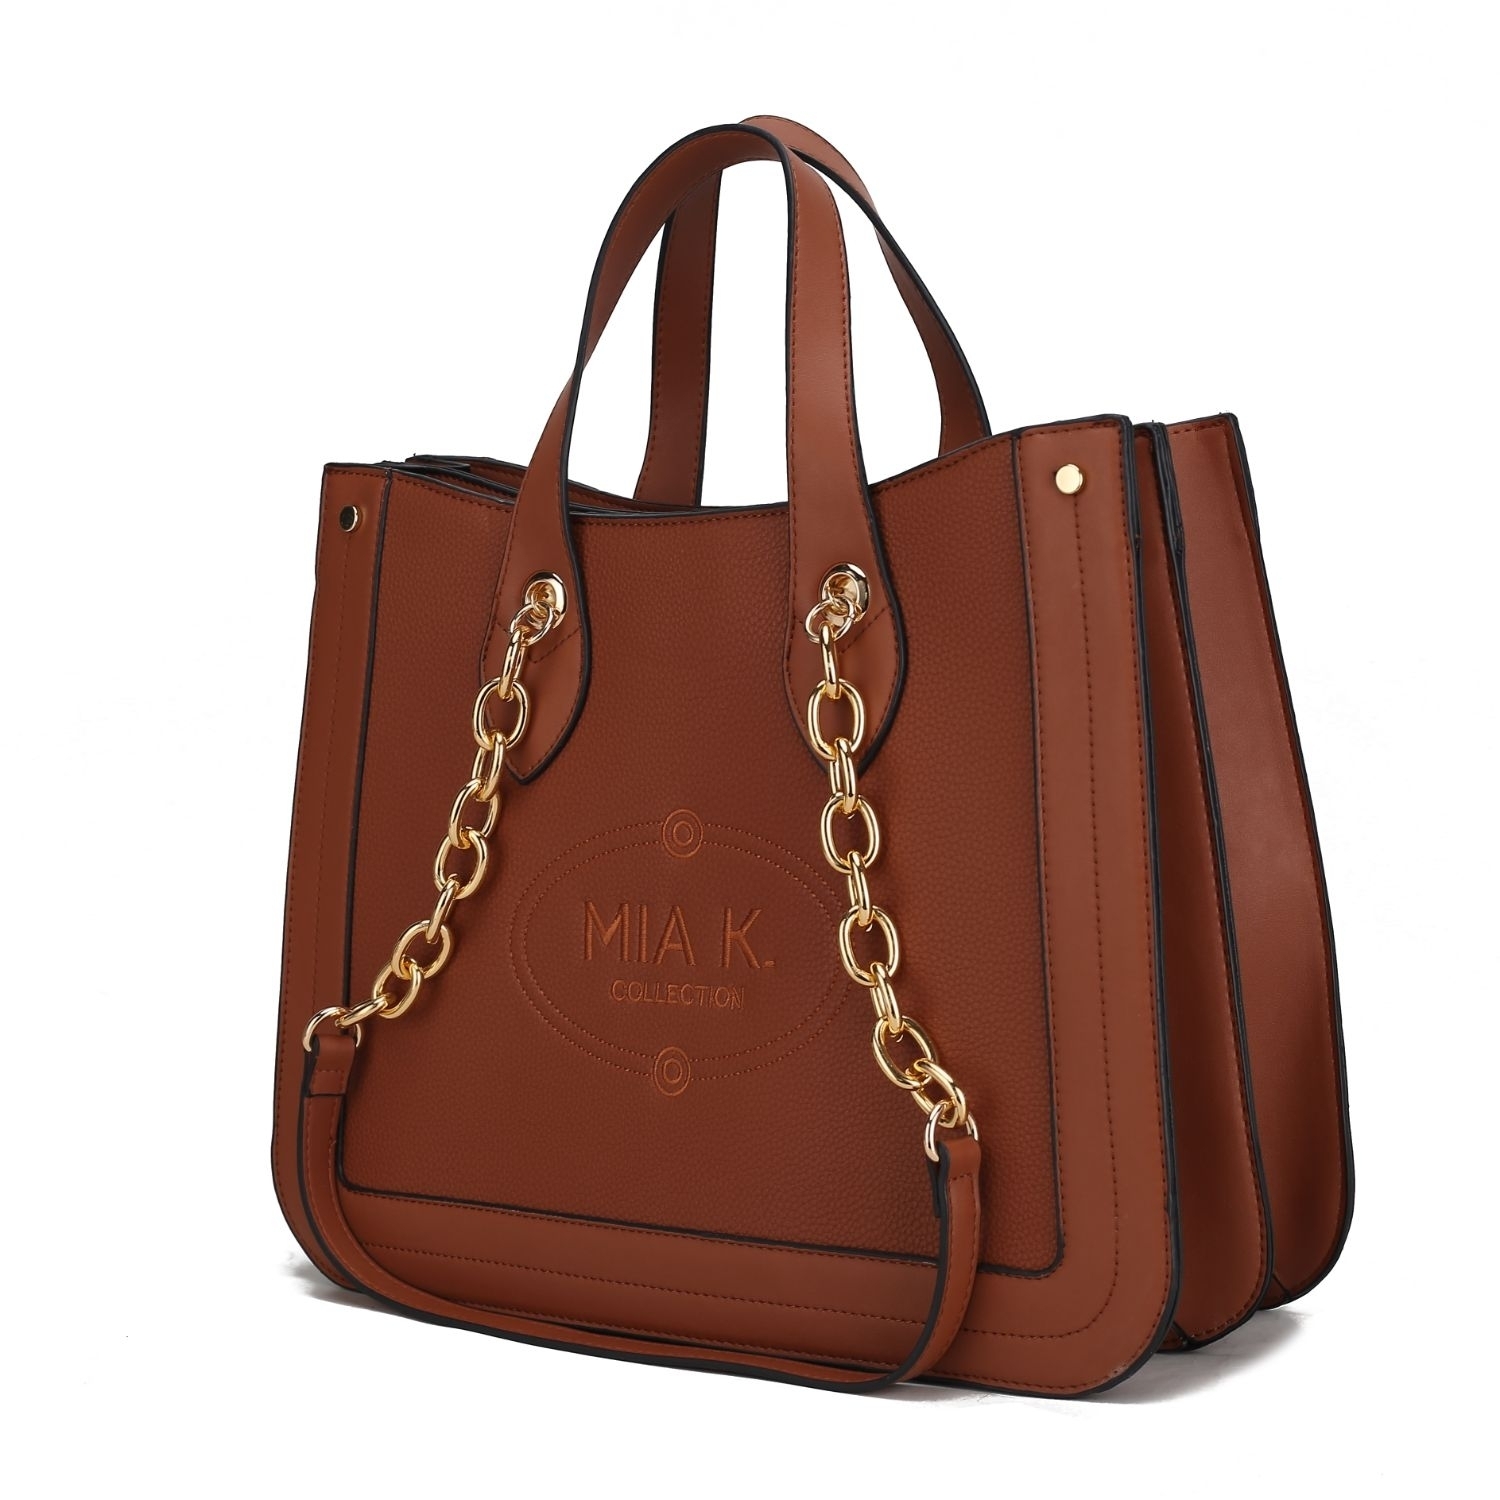 MKF Collection Stella Vegan Leather Women's Handbag Double Compartment Oversize Classy Tote By Mia K. - Cognac